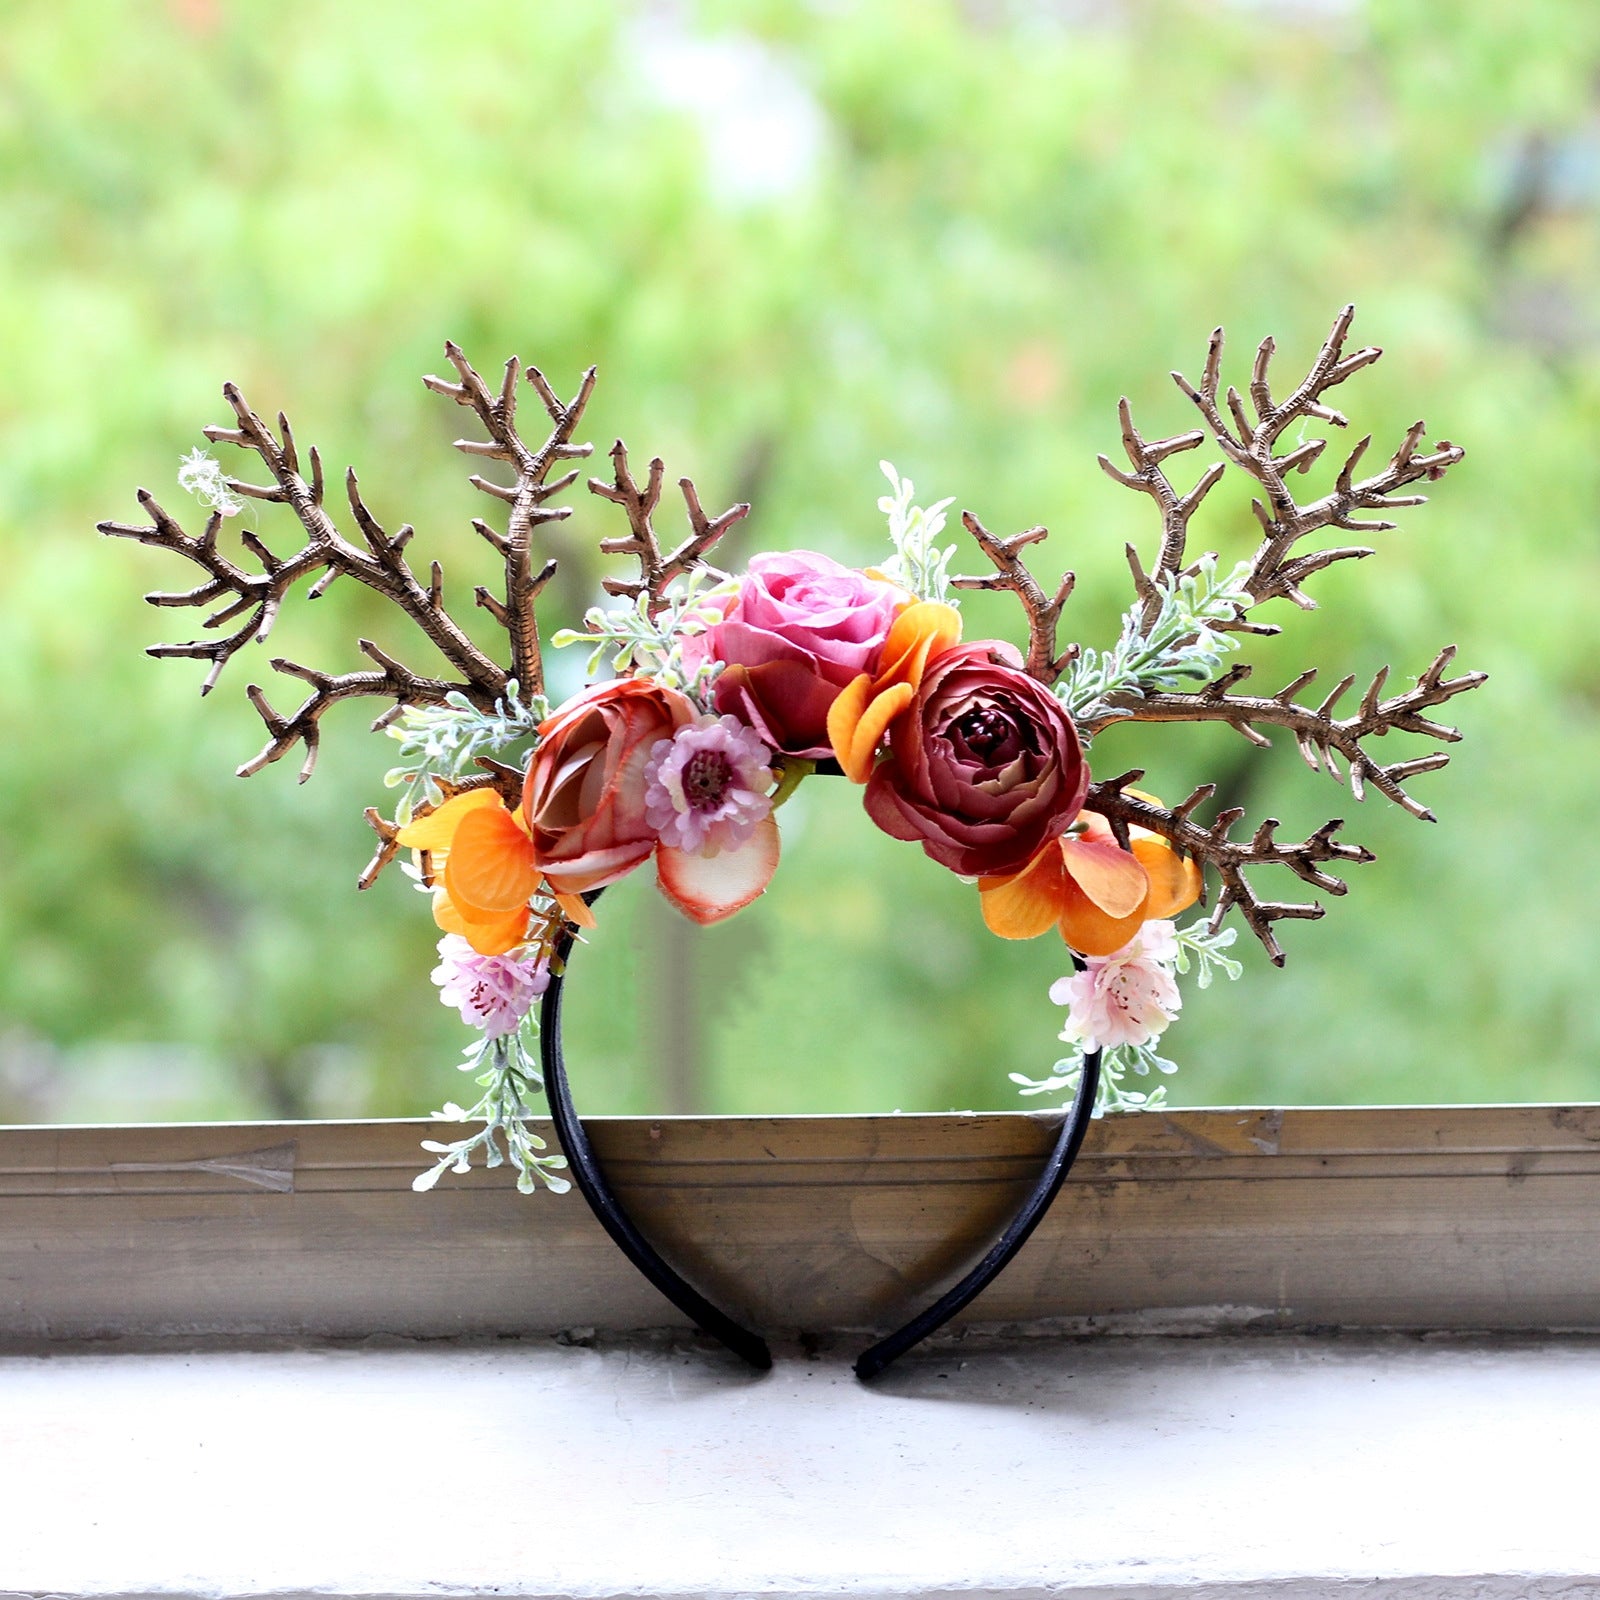 Bridal Wreath Headpiece Christmas antlers